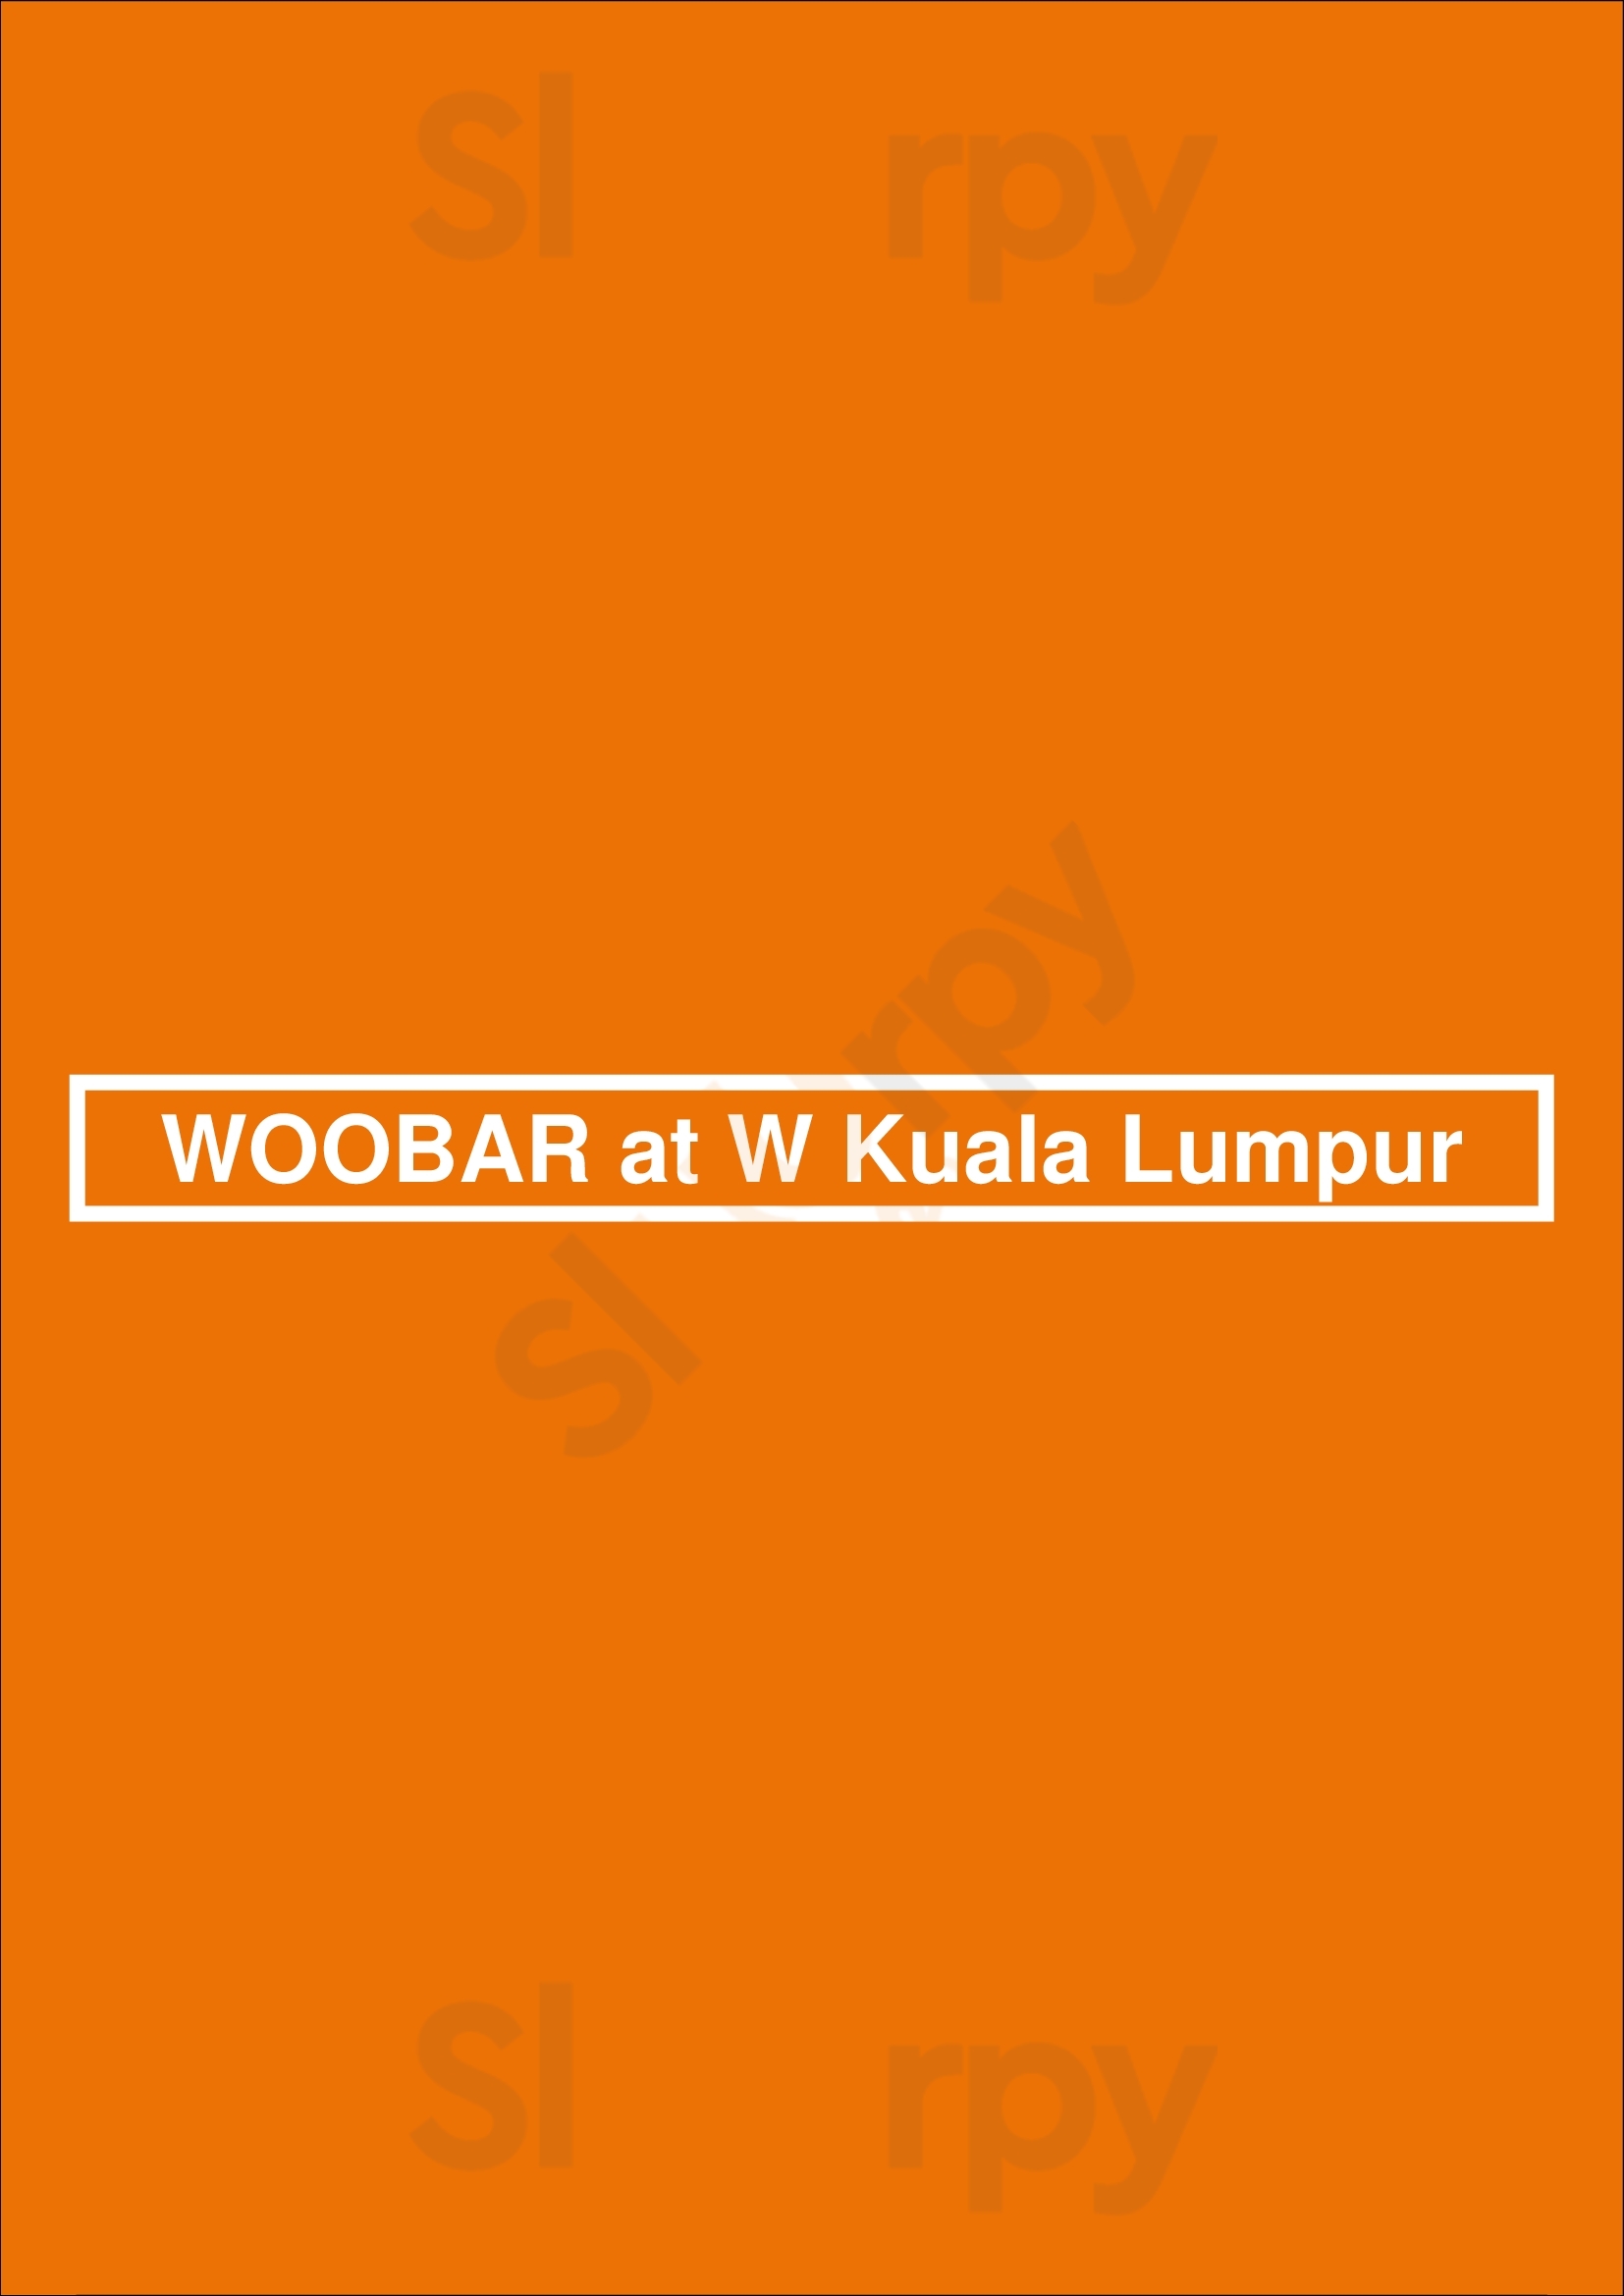 Woobar At W Kuala Lumpur Kuala Lumpur Menu - 1